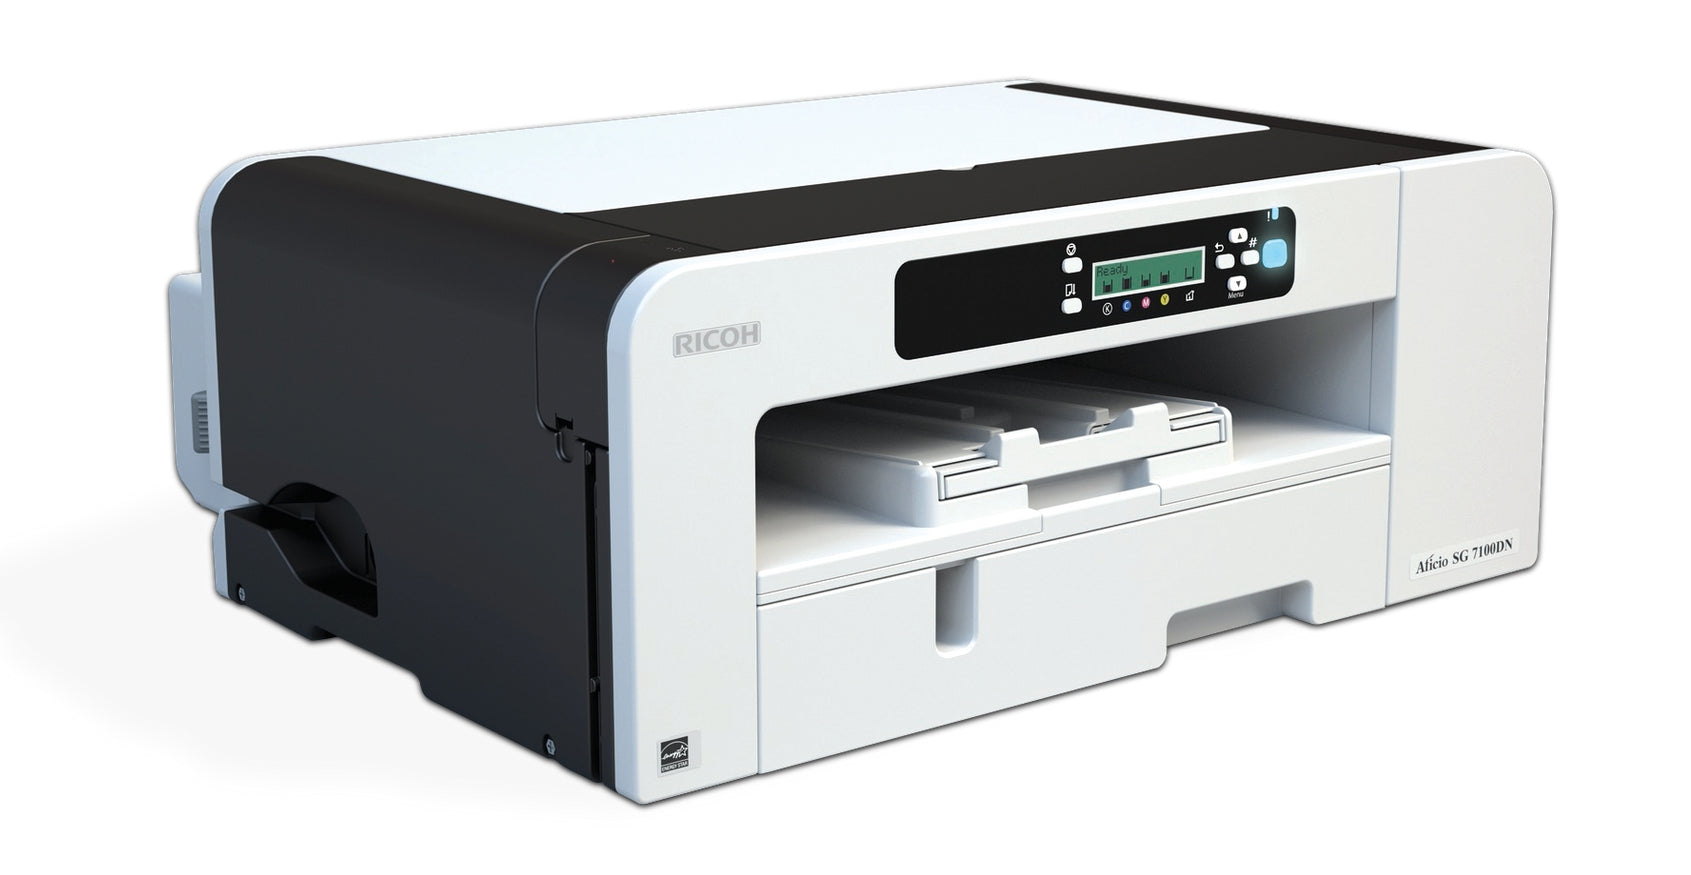 Ricoh SG7100DN printer (Demo Model) - Joto Imaging Supplies Canada